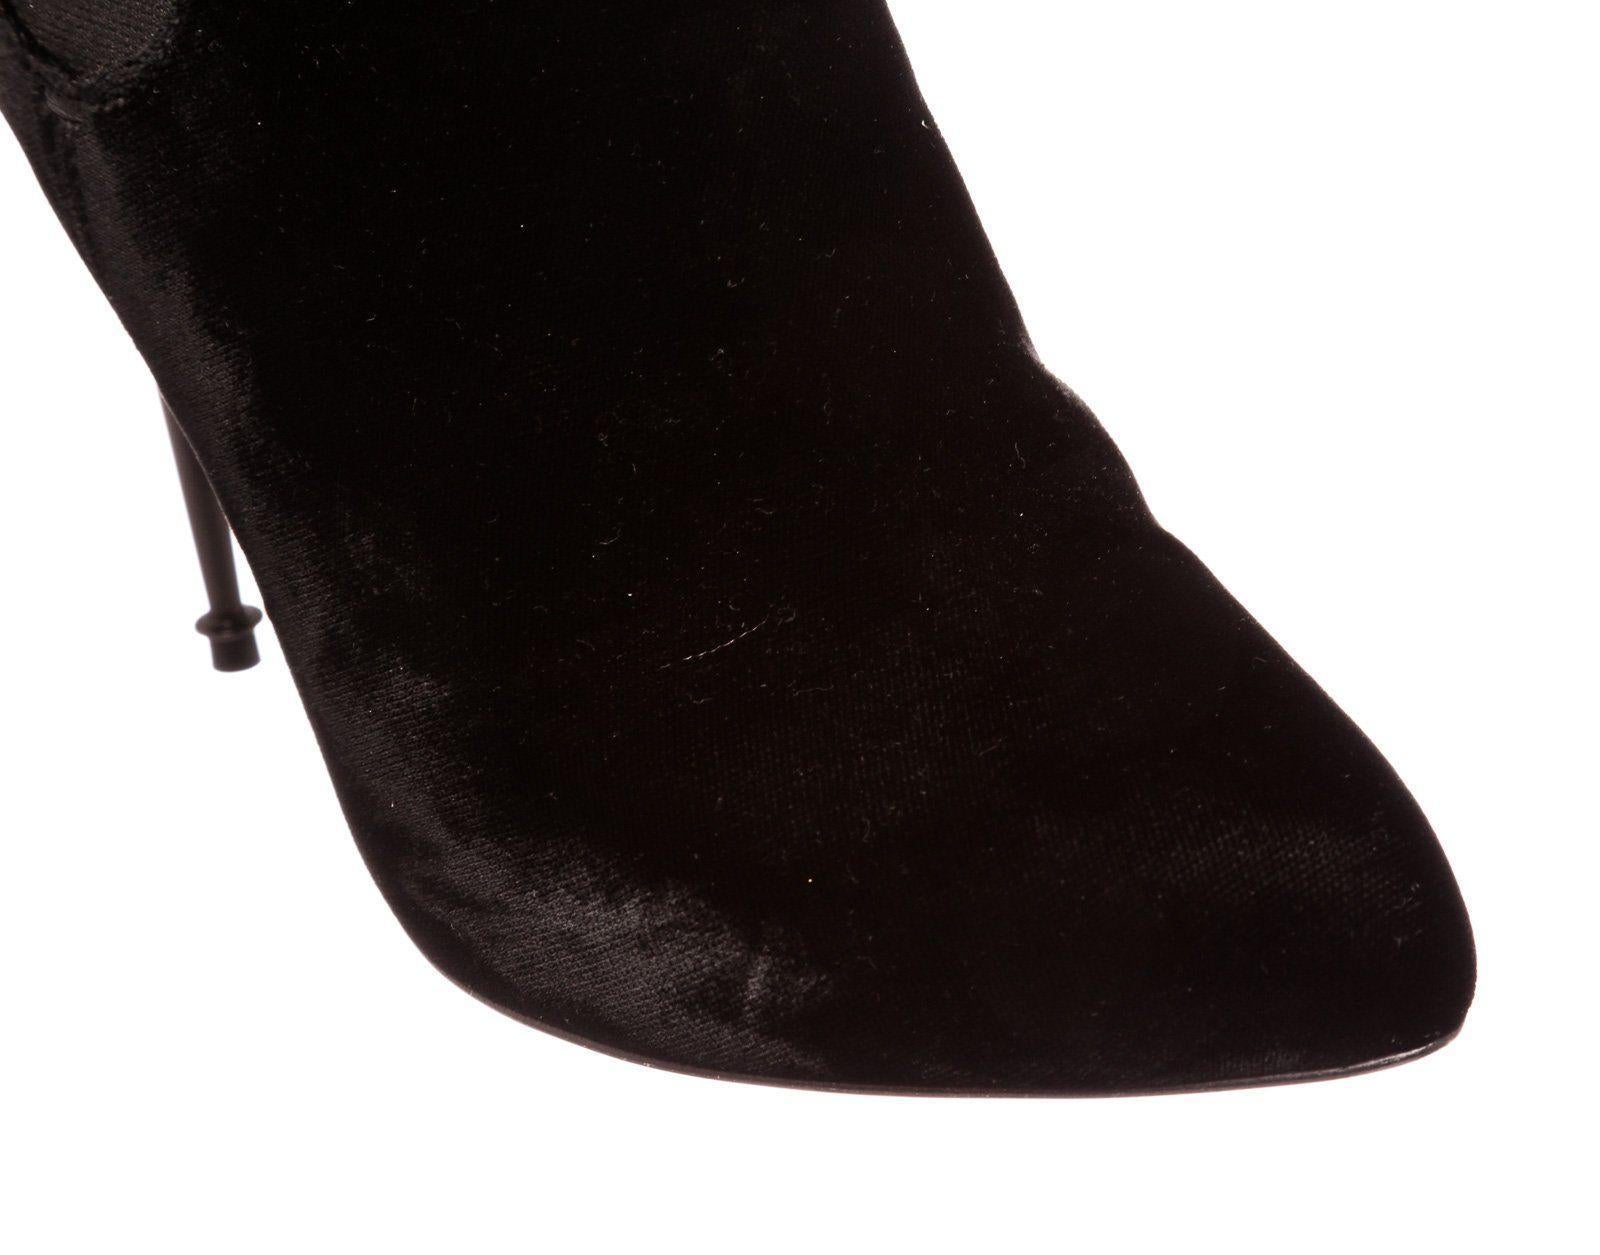 Tom Ford Black Velvet Spiked Boots Heels Shoes 39.5 1